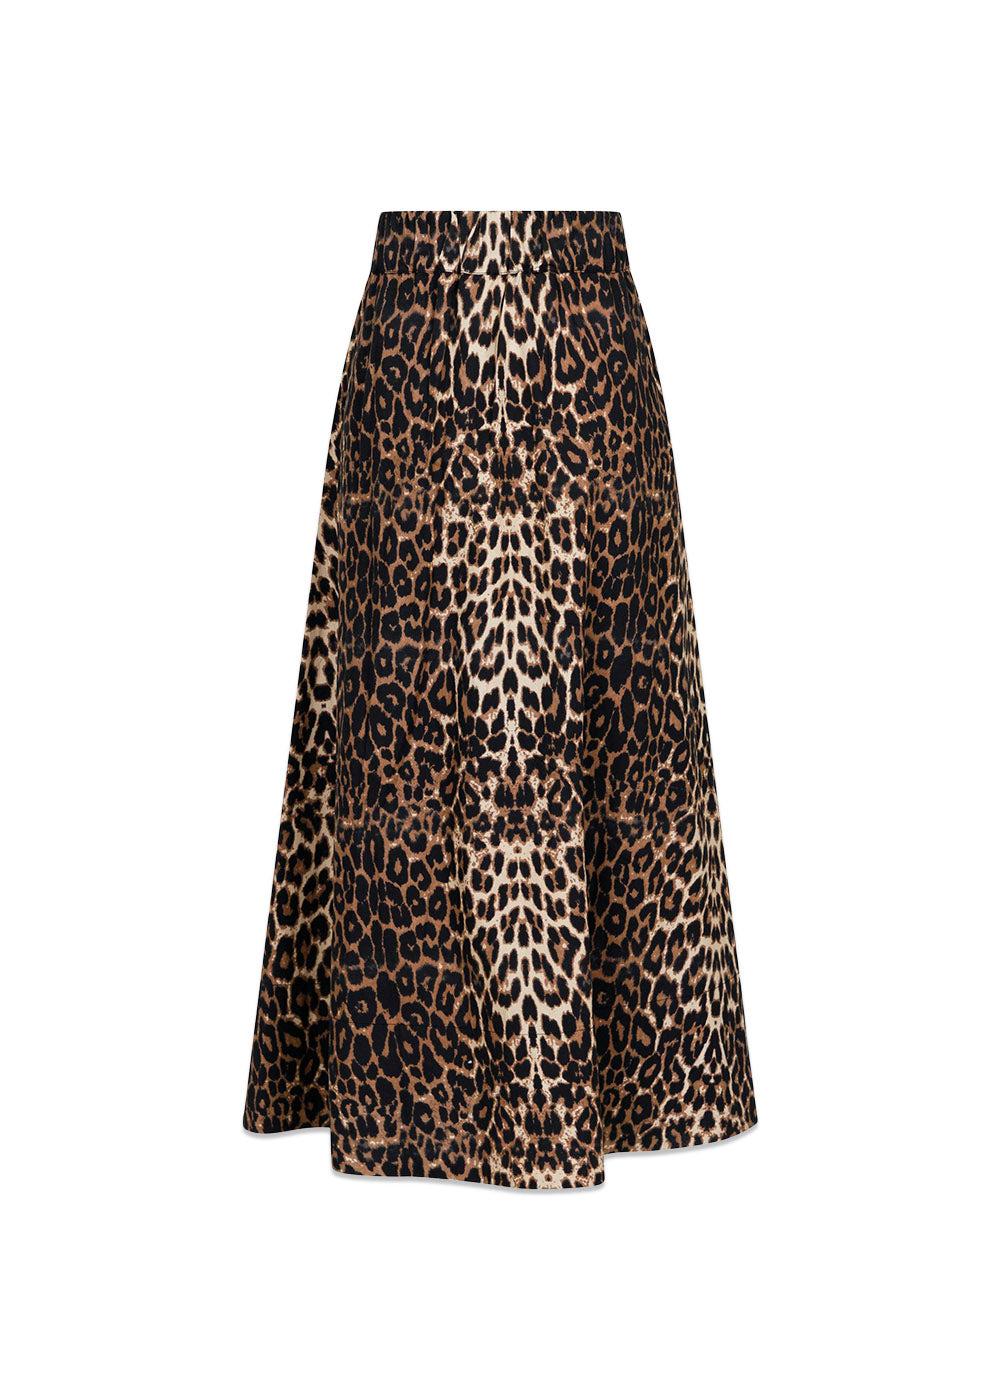 Yara Leo Long Skirt - Leopard